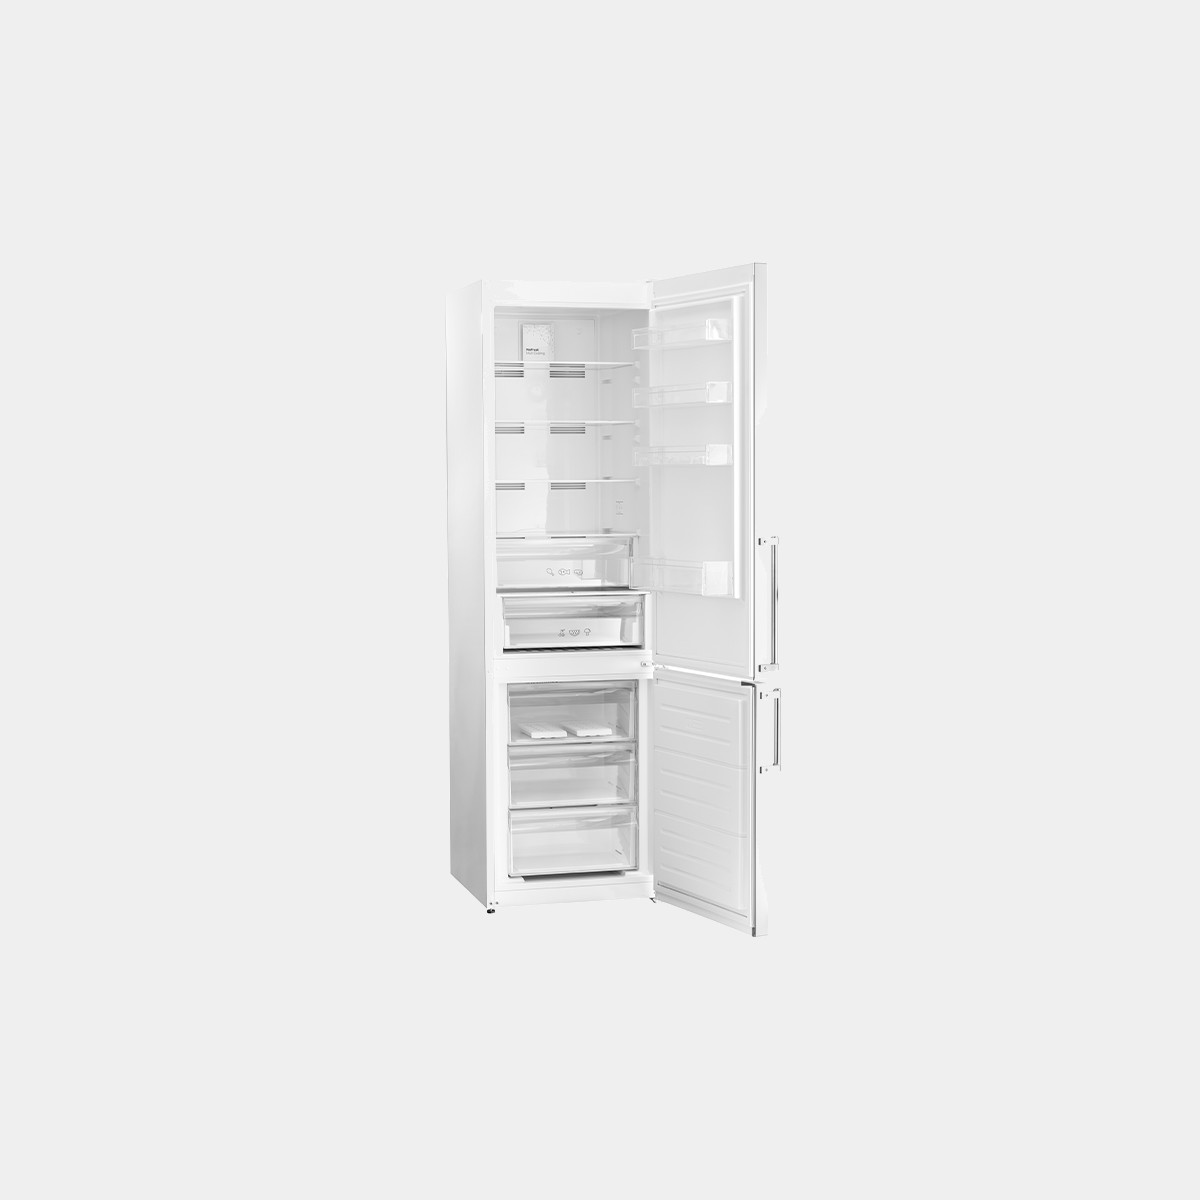 Svan SVF2065FFD frigorifico combi blanco 201x59,5 no frost A++